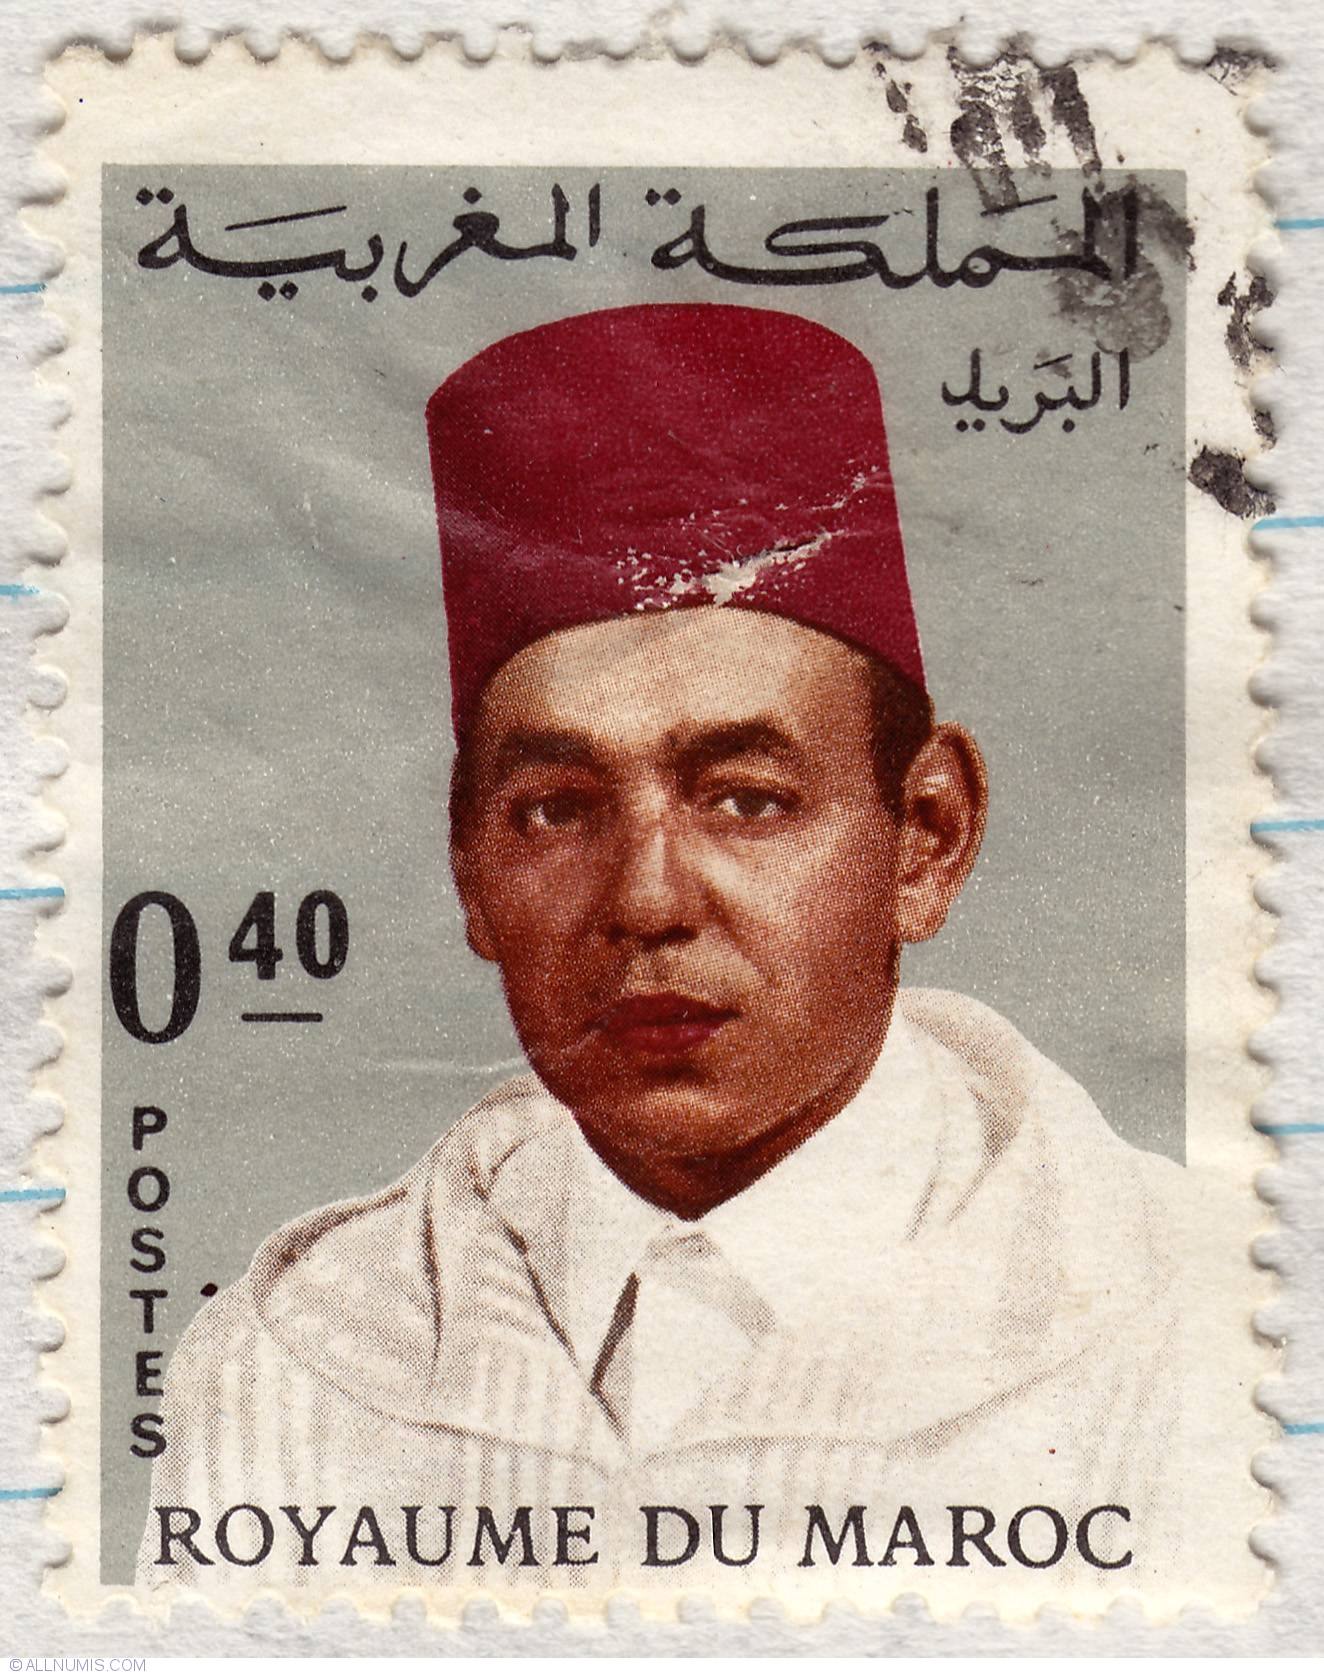 0,40 1968 - King Hassan II - 040-1968-king-hassan-ii_1189_21278067cbf0b80L